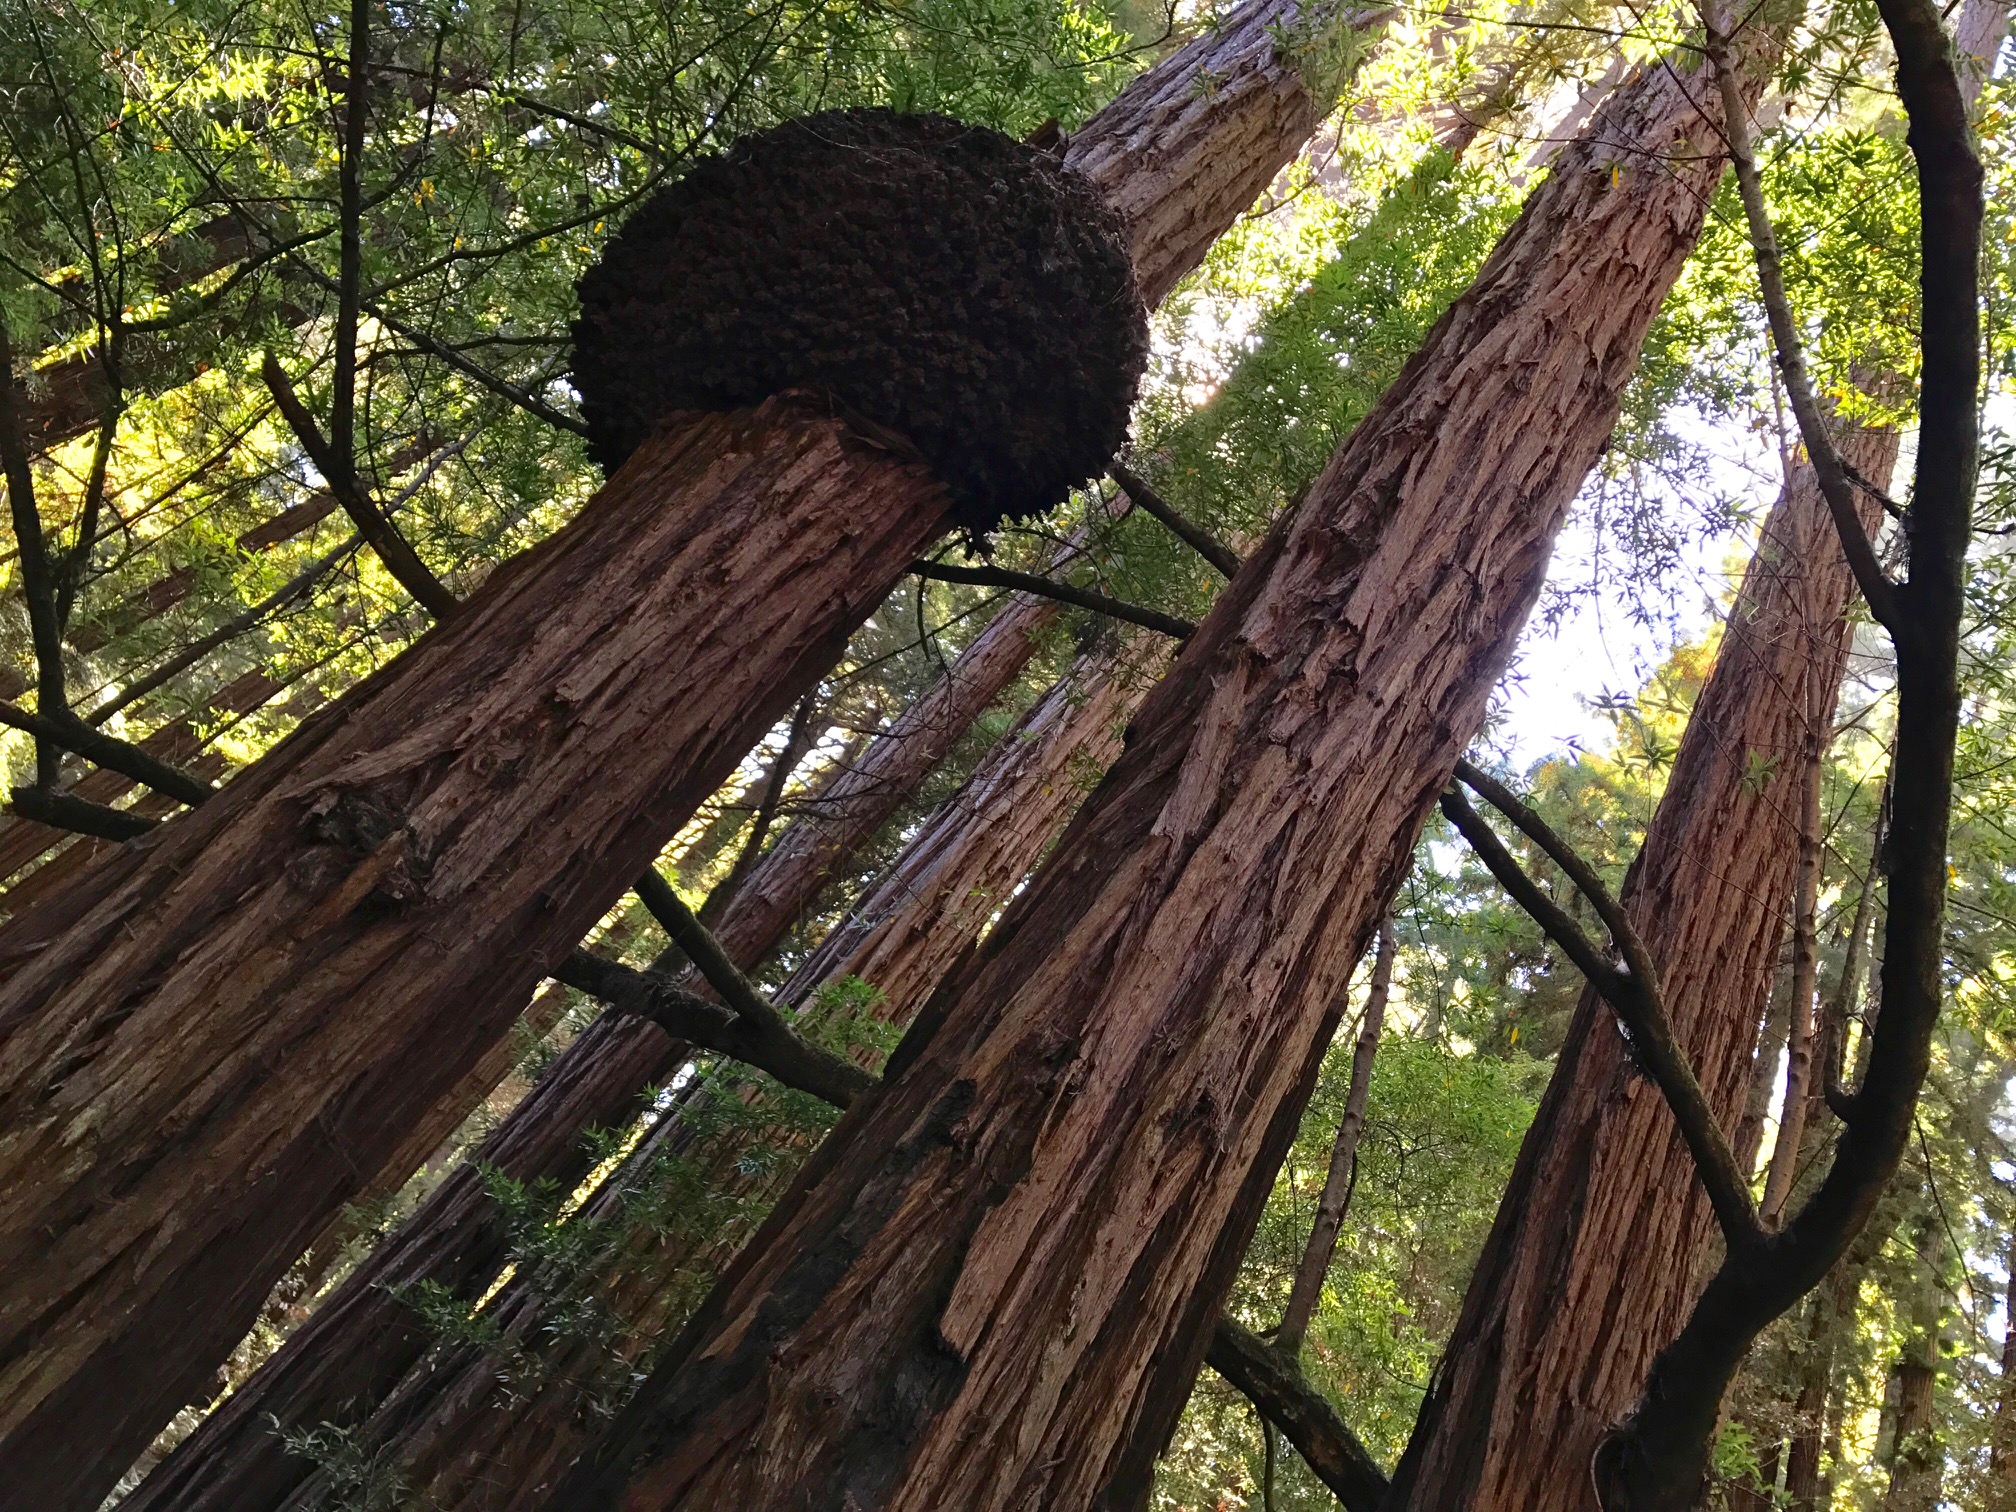 A massive redwood tree burl